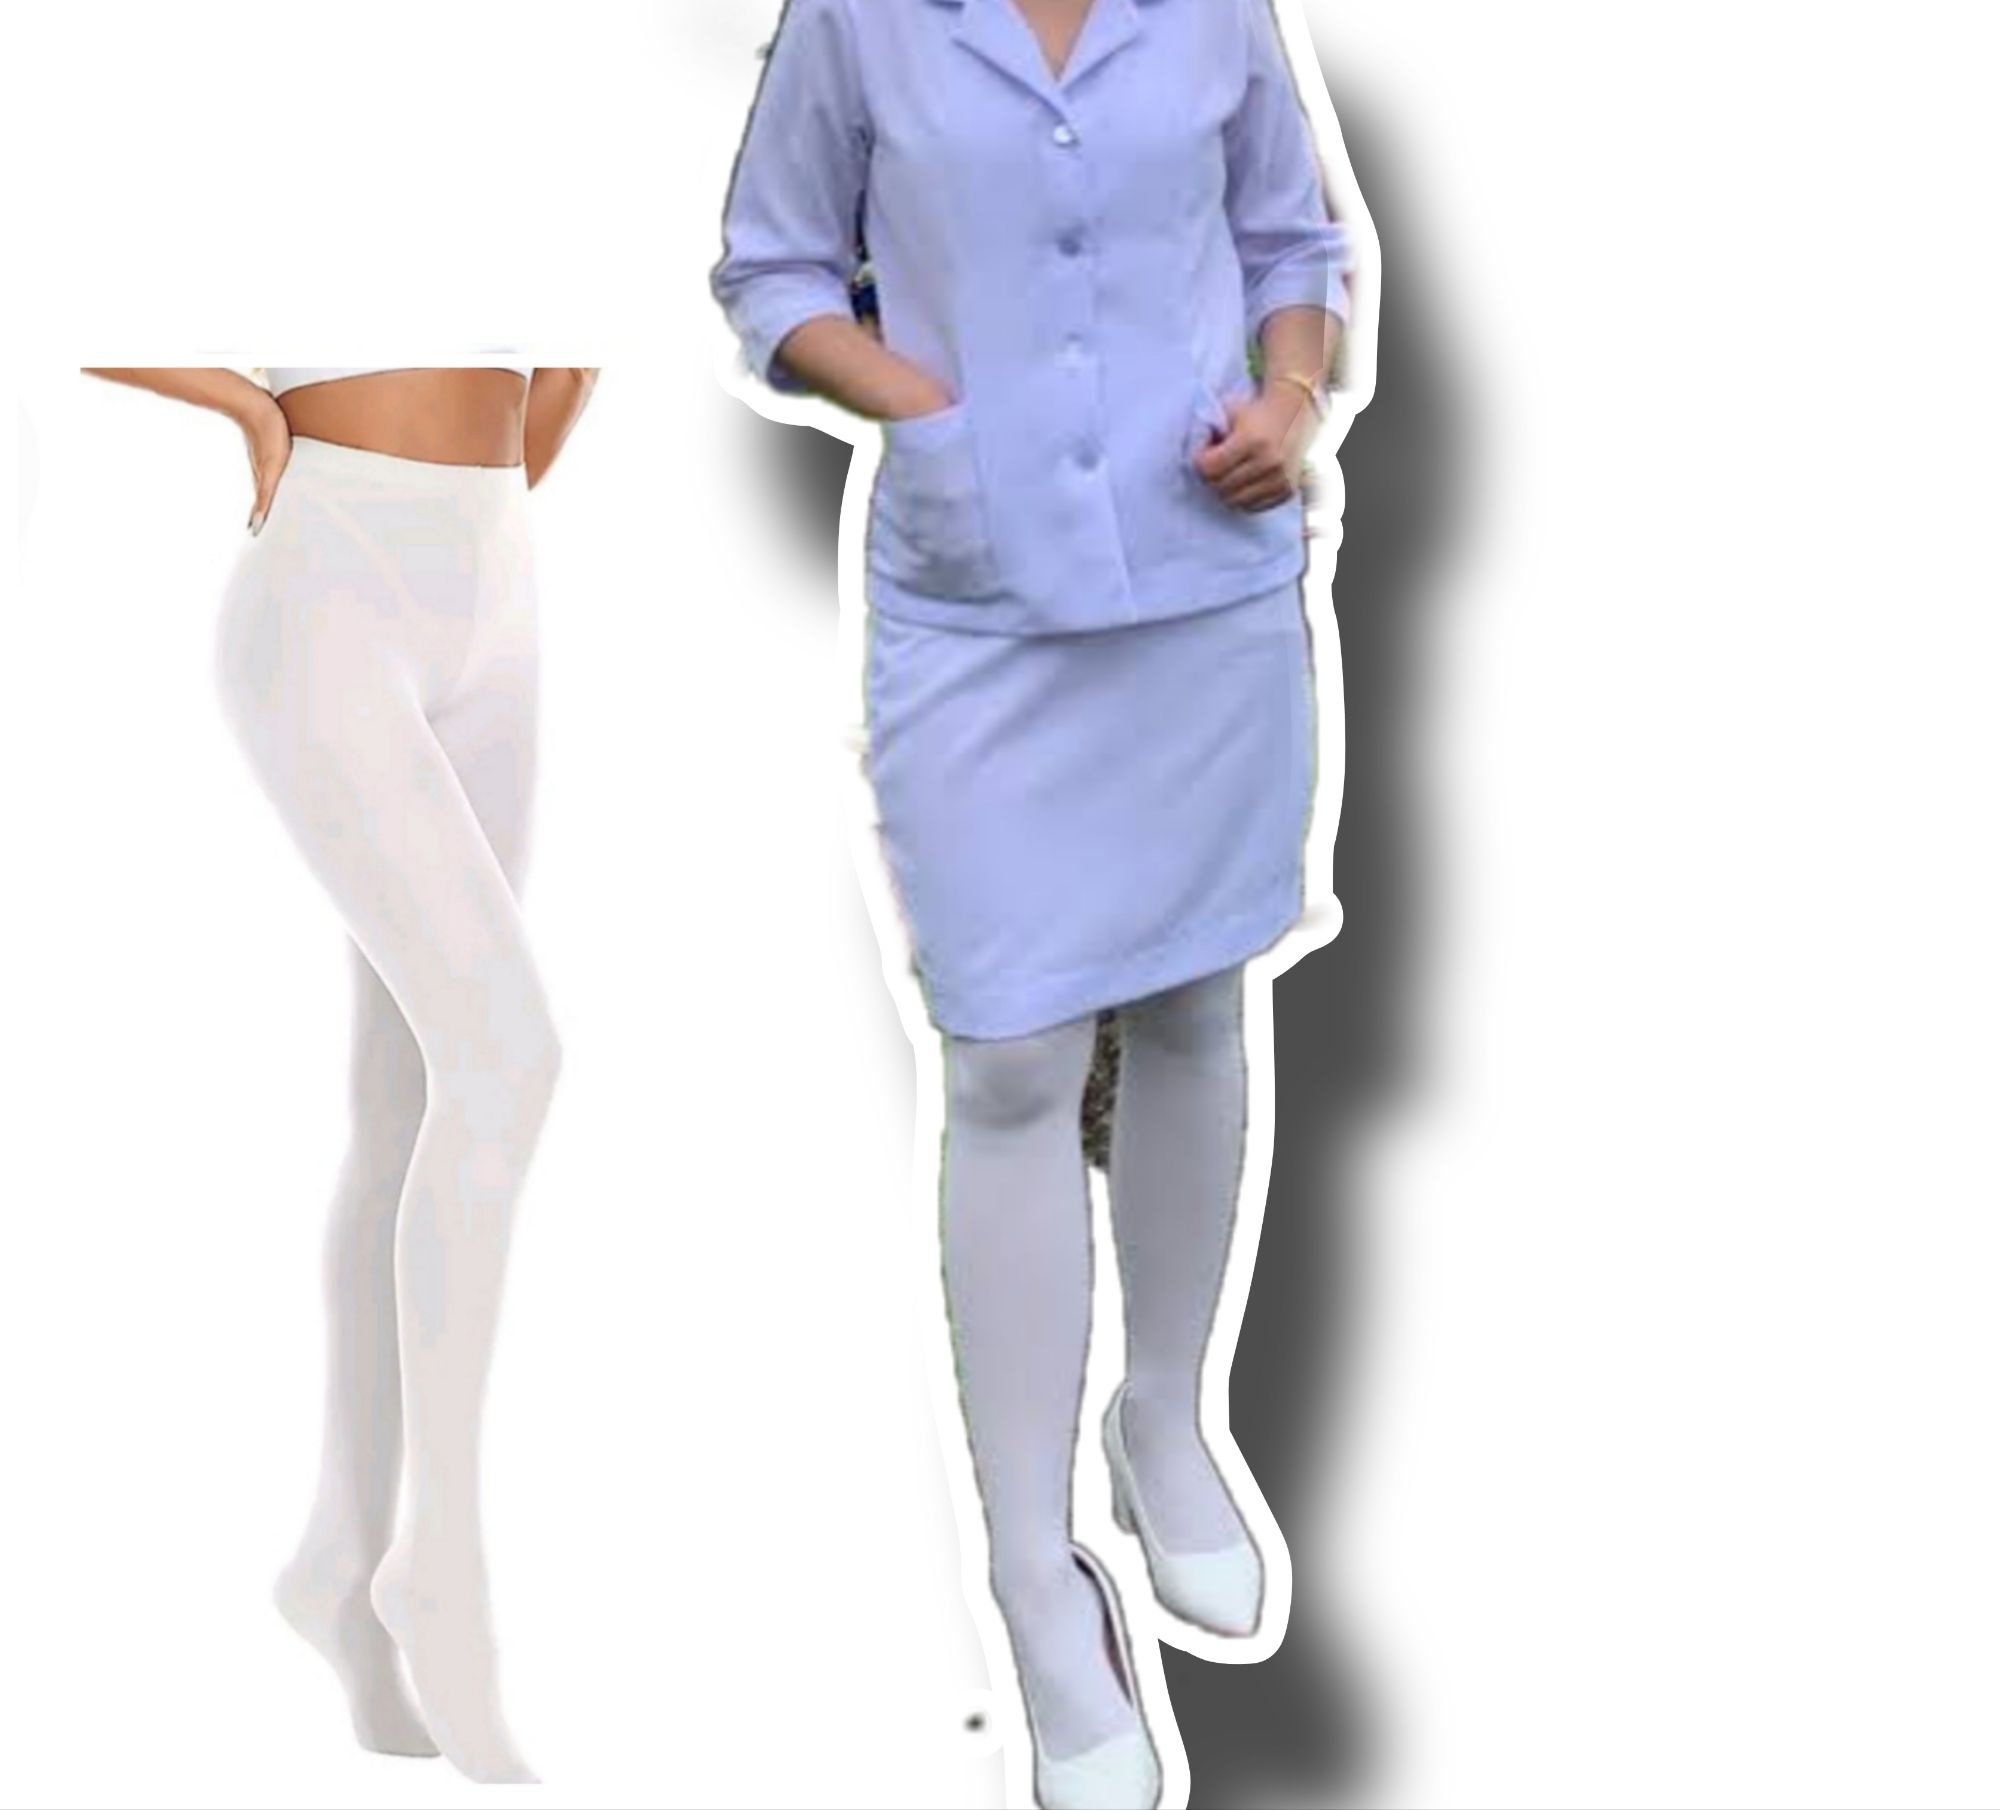 Buy Nurses White Stocking online